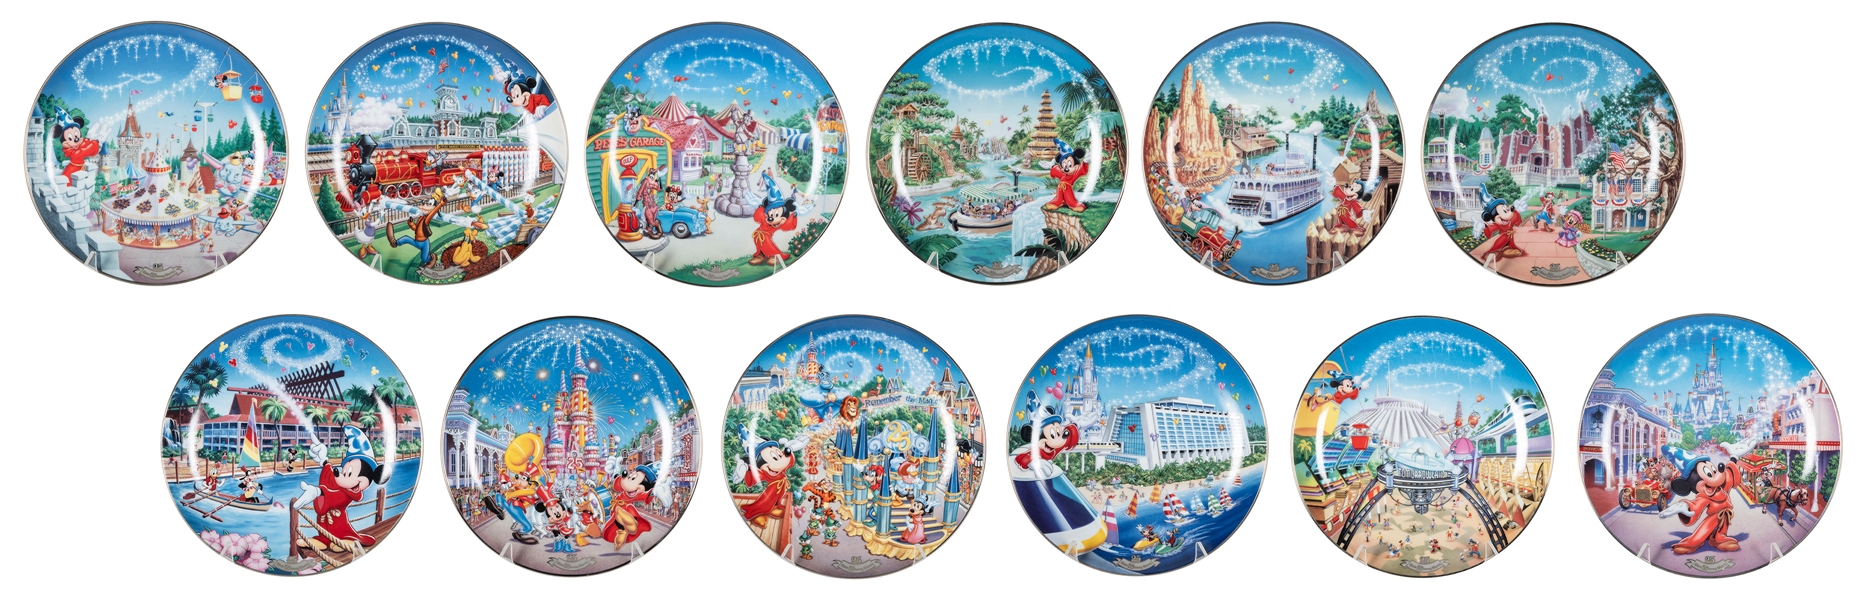  Set of Walt Disney World 25th Anniversary Dishes (12). Prod...